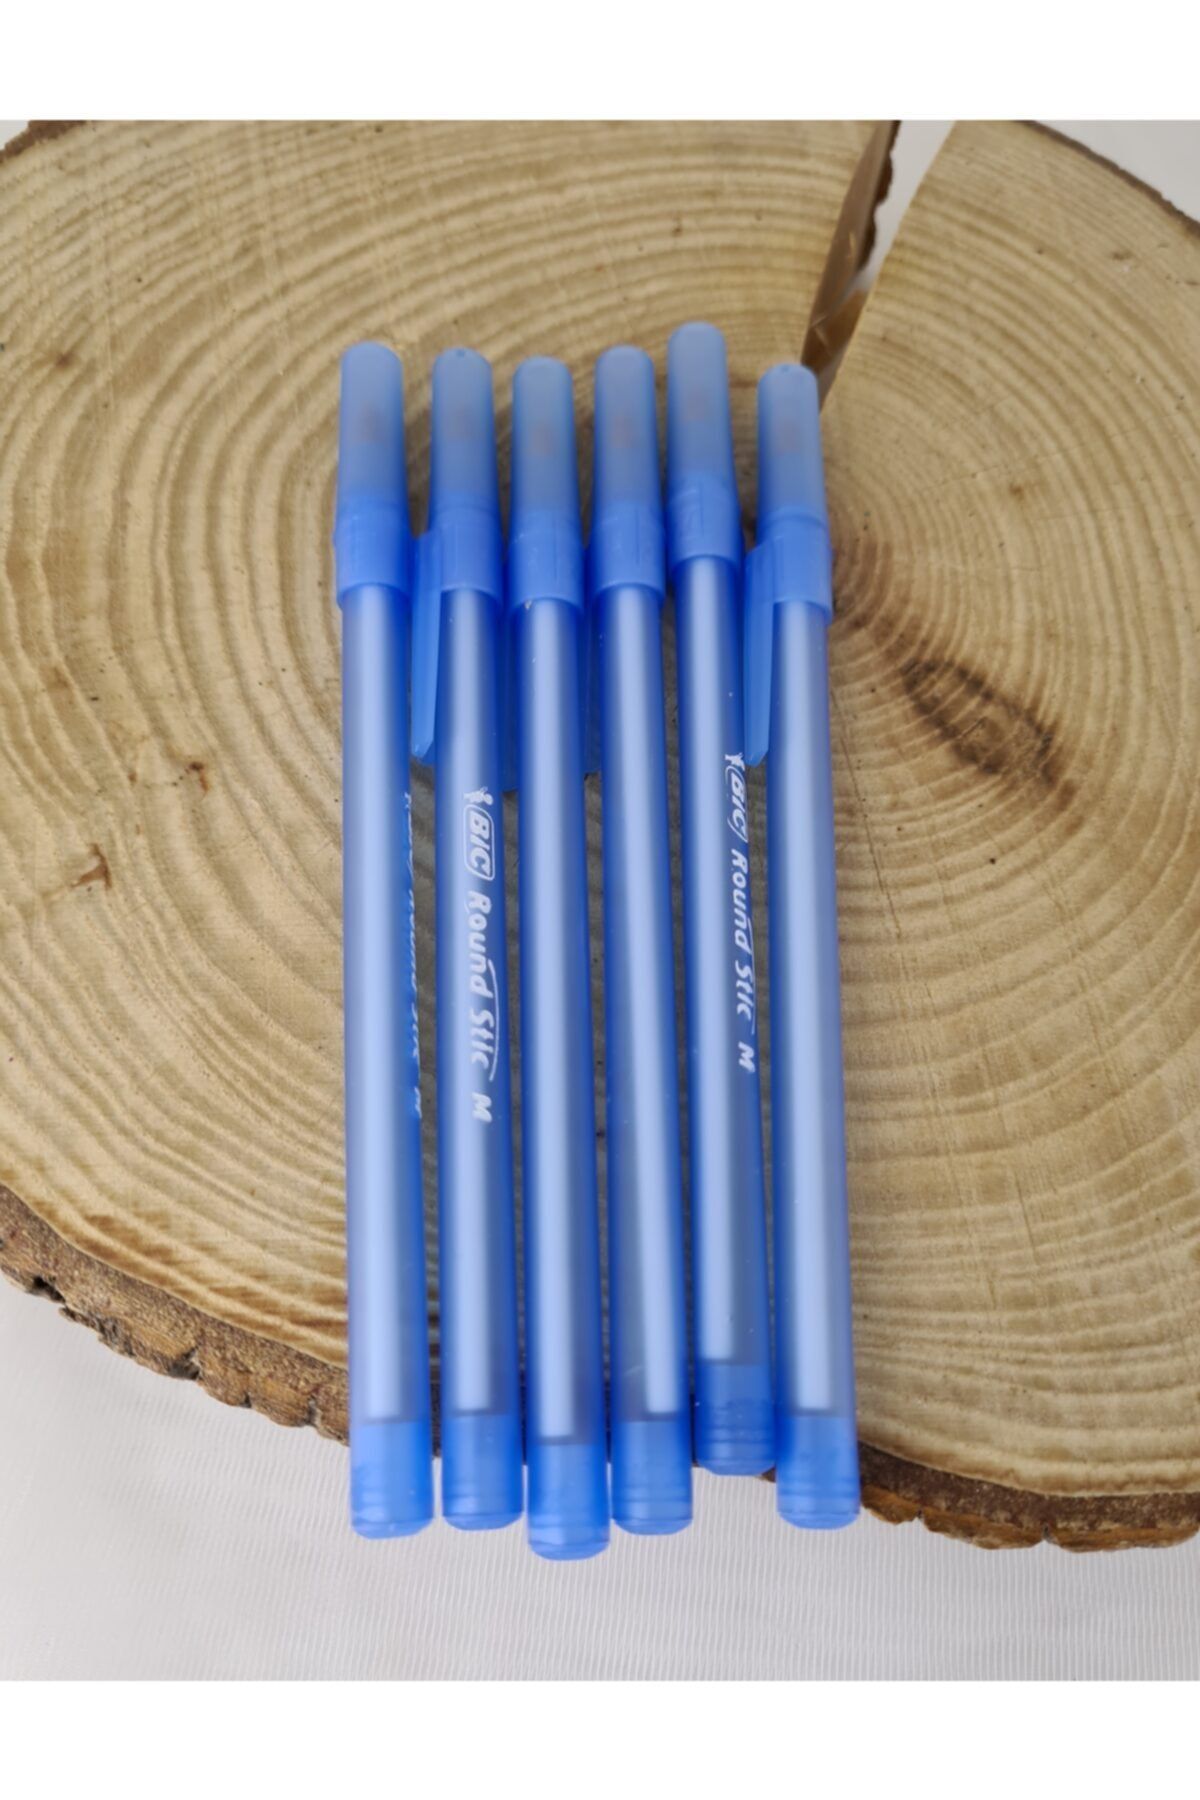 Bic Round Stic Mavi 6 Lı Tükenmez Kalem